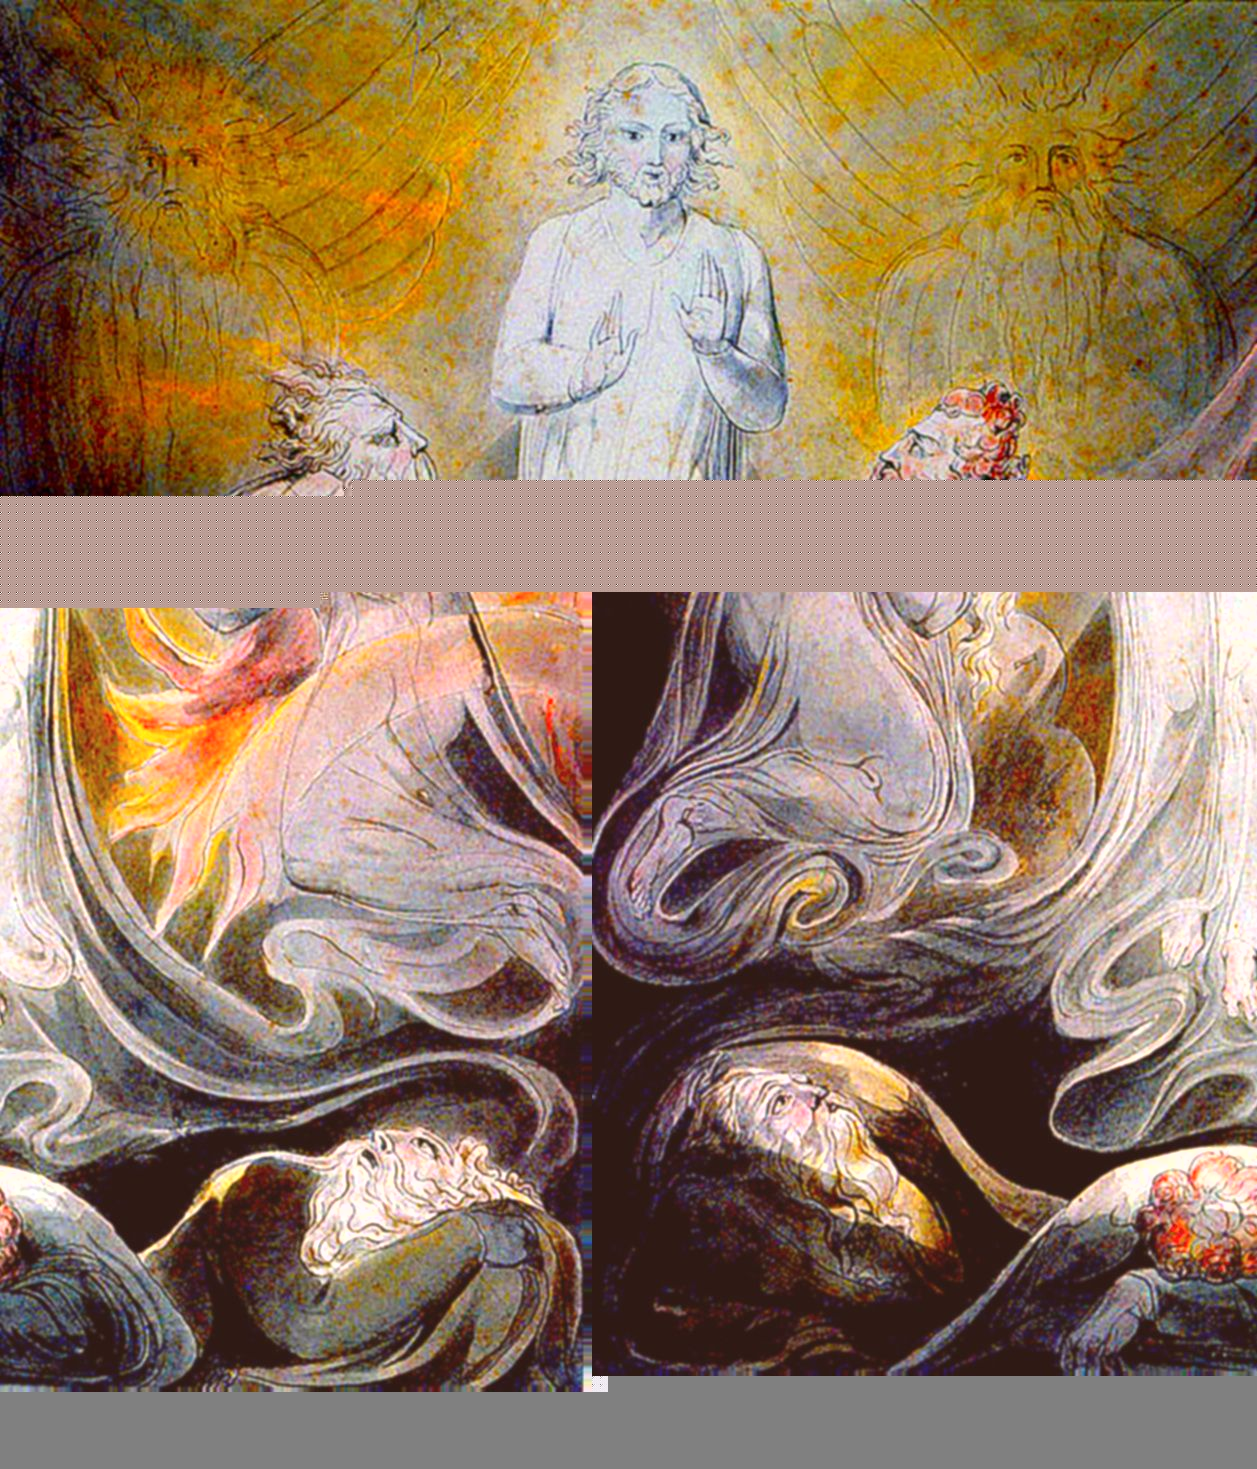 Transfiguration by William Blake